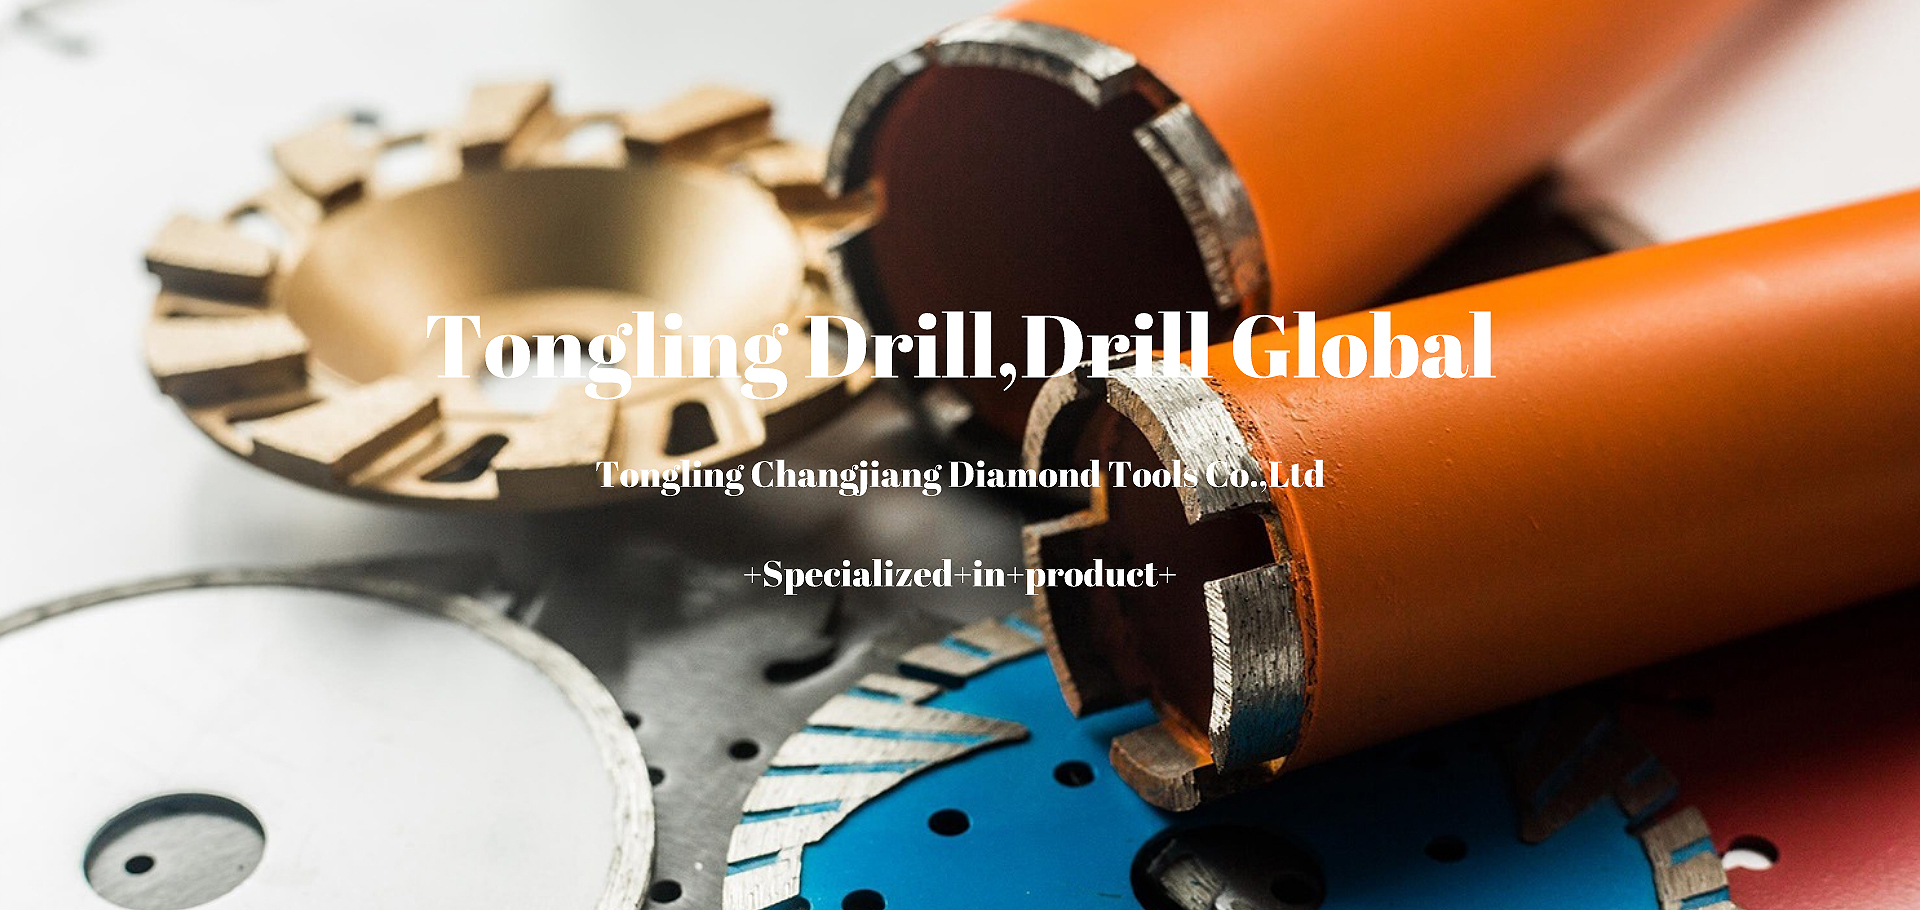 Tongling Drill,Drill Global